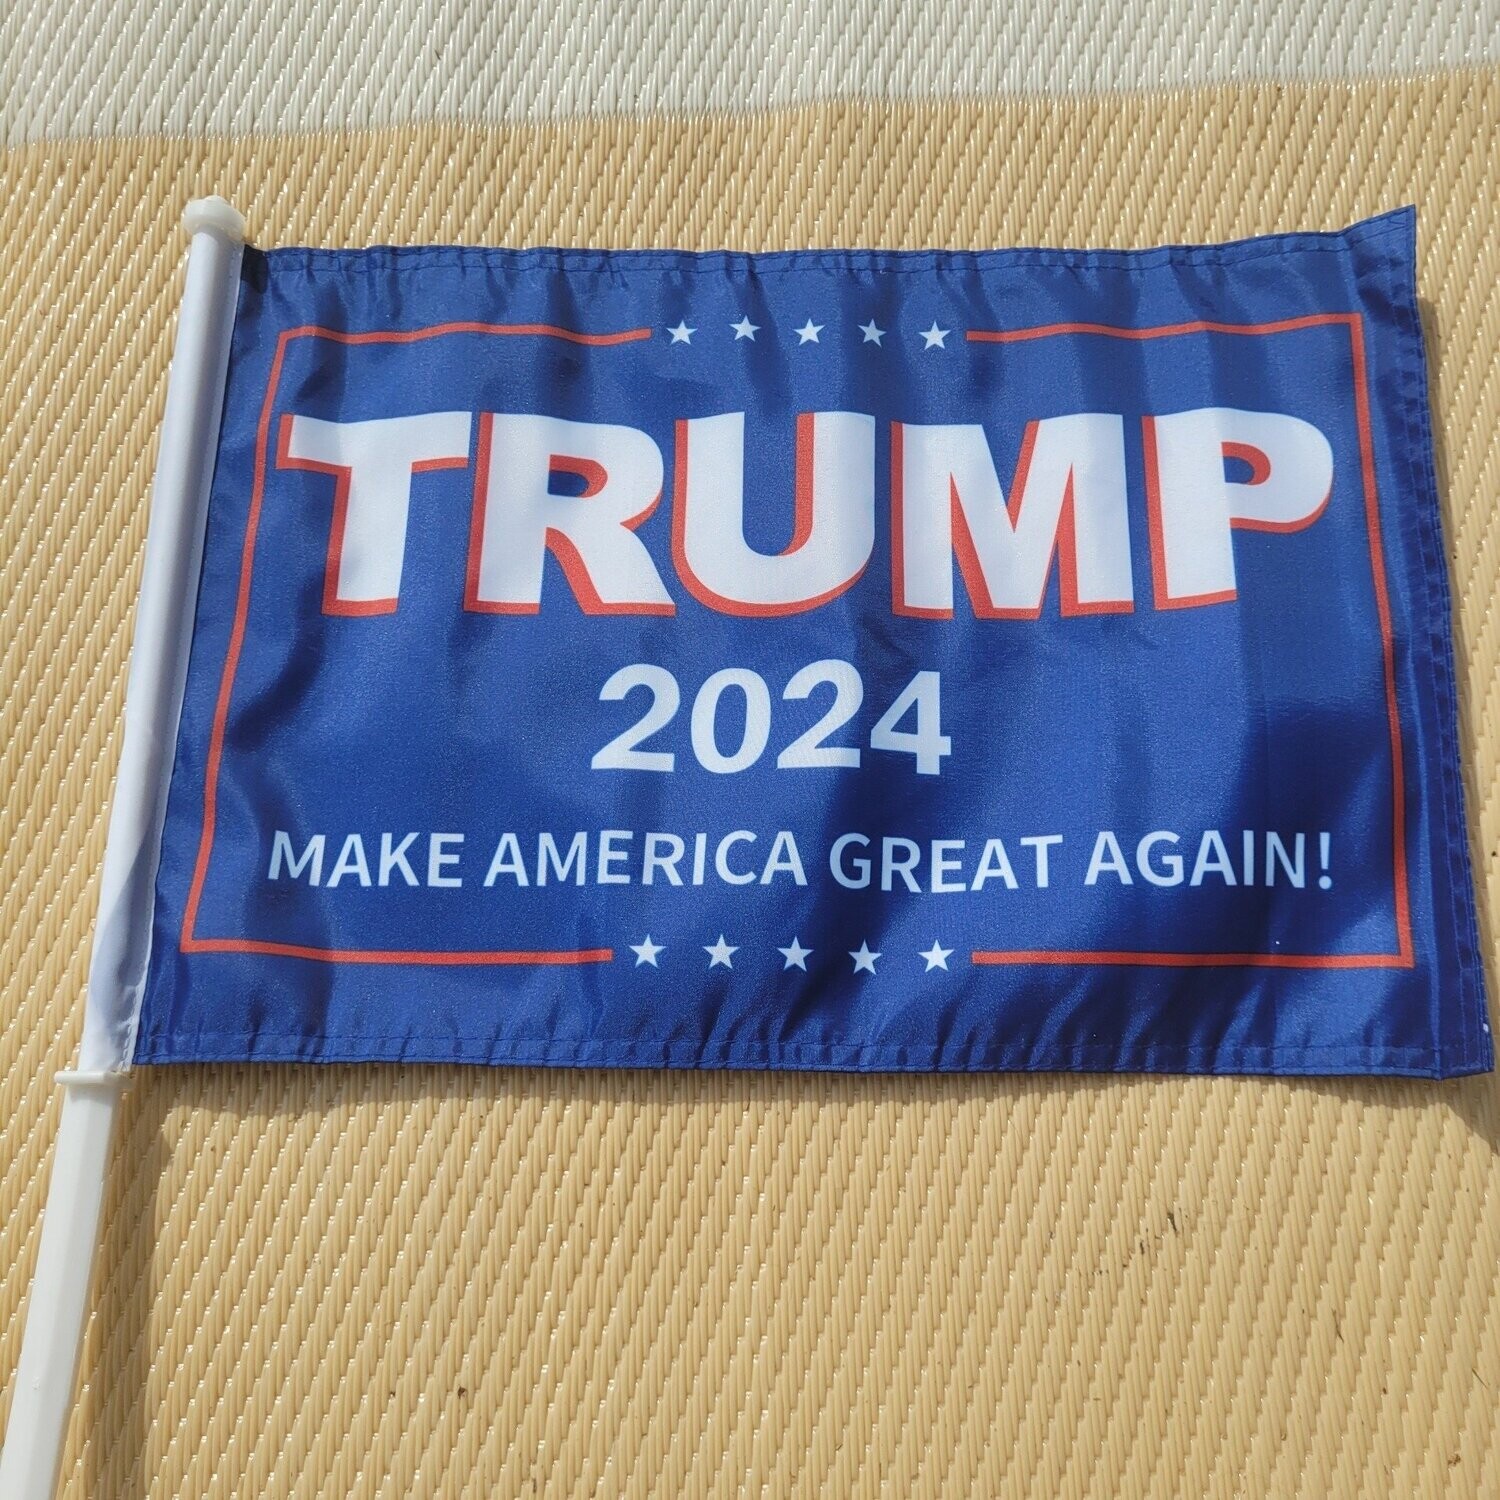 Trump 2024 Car Flag